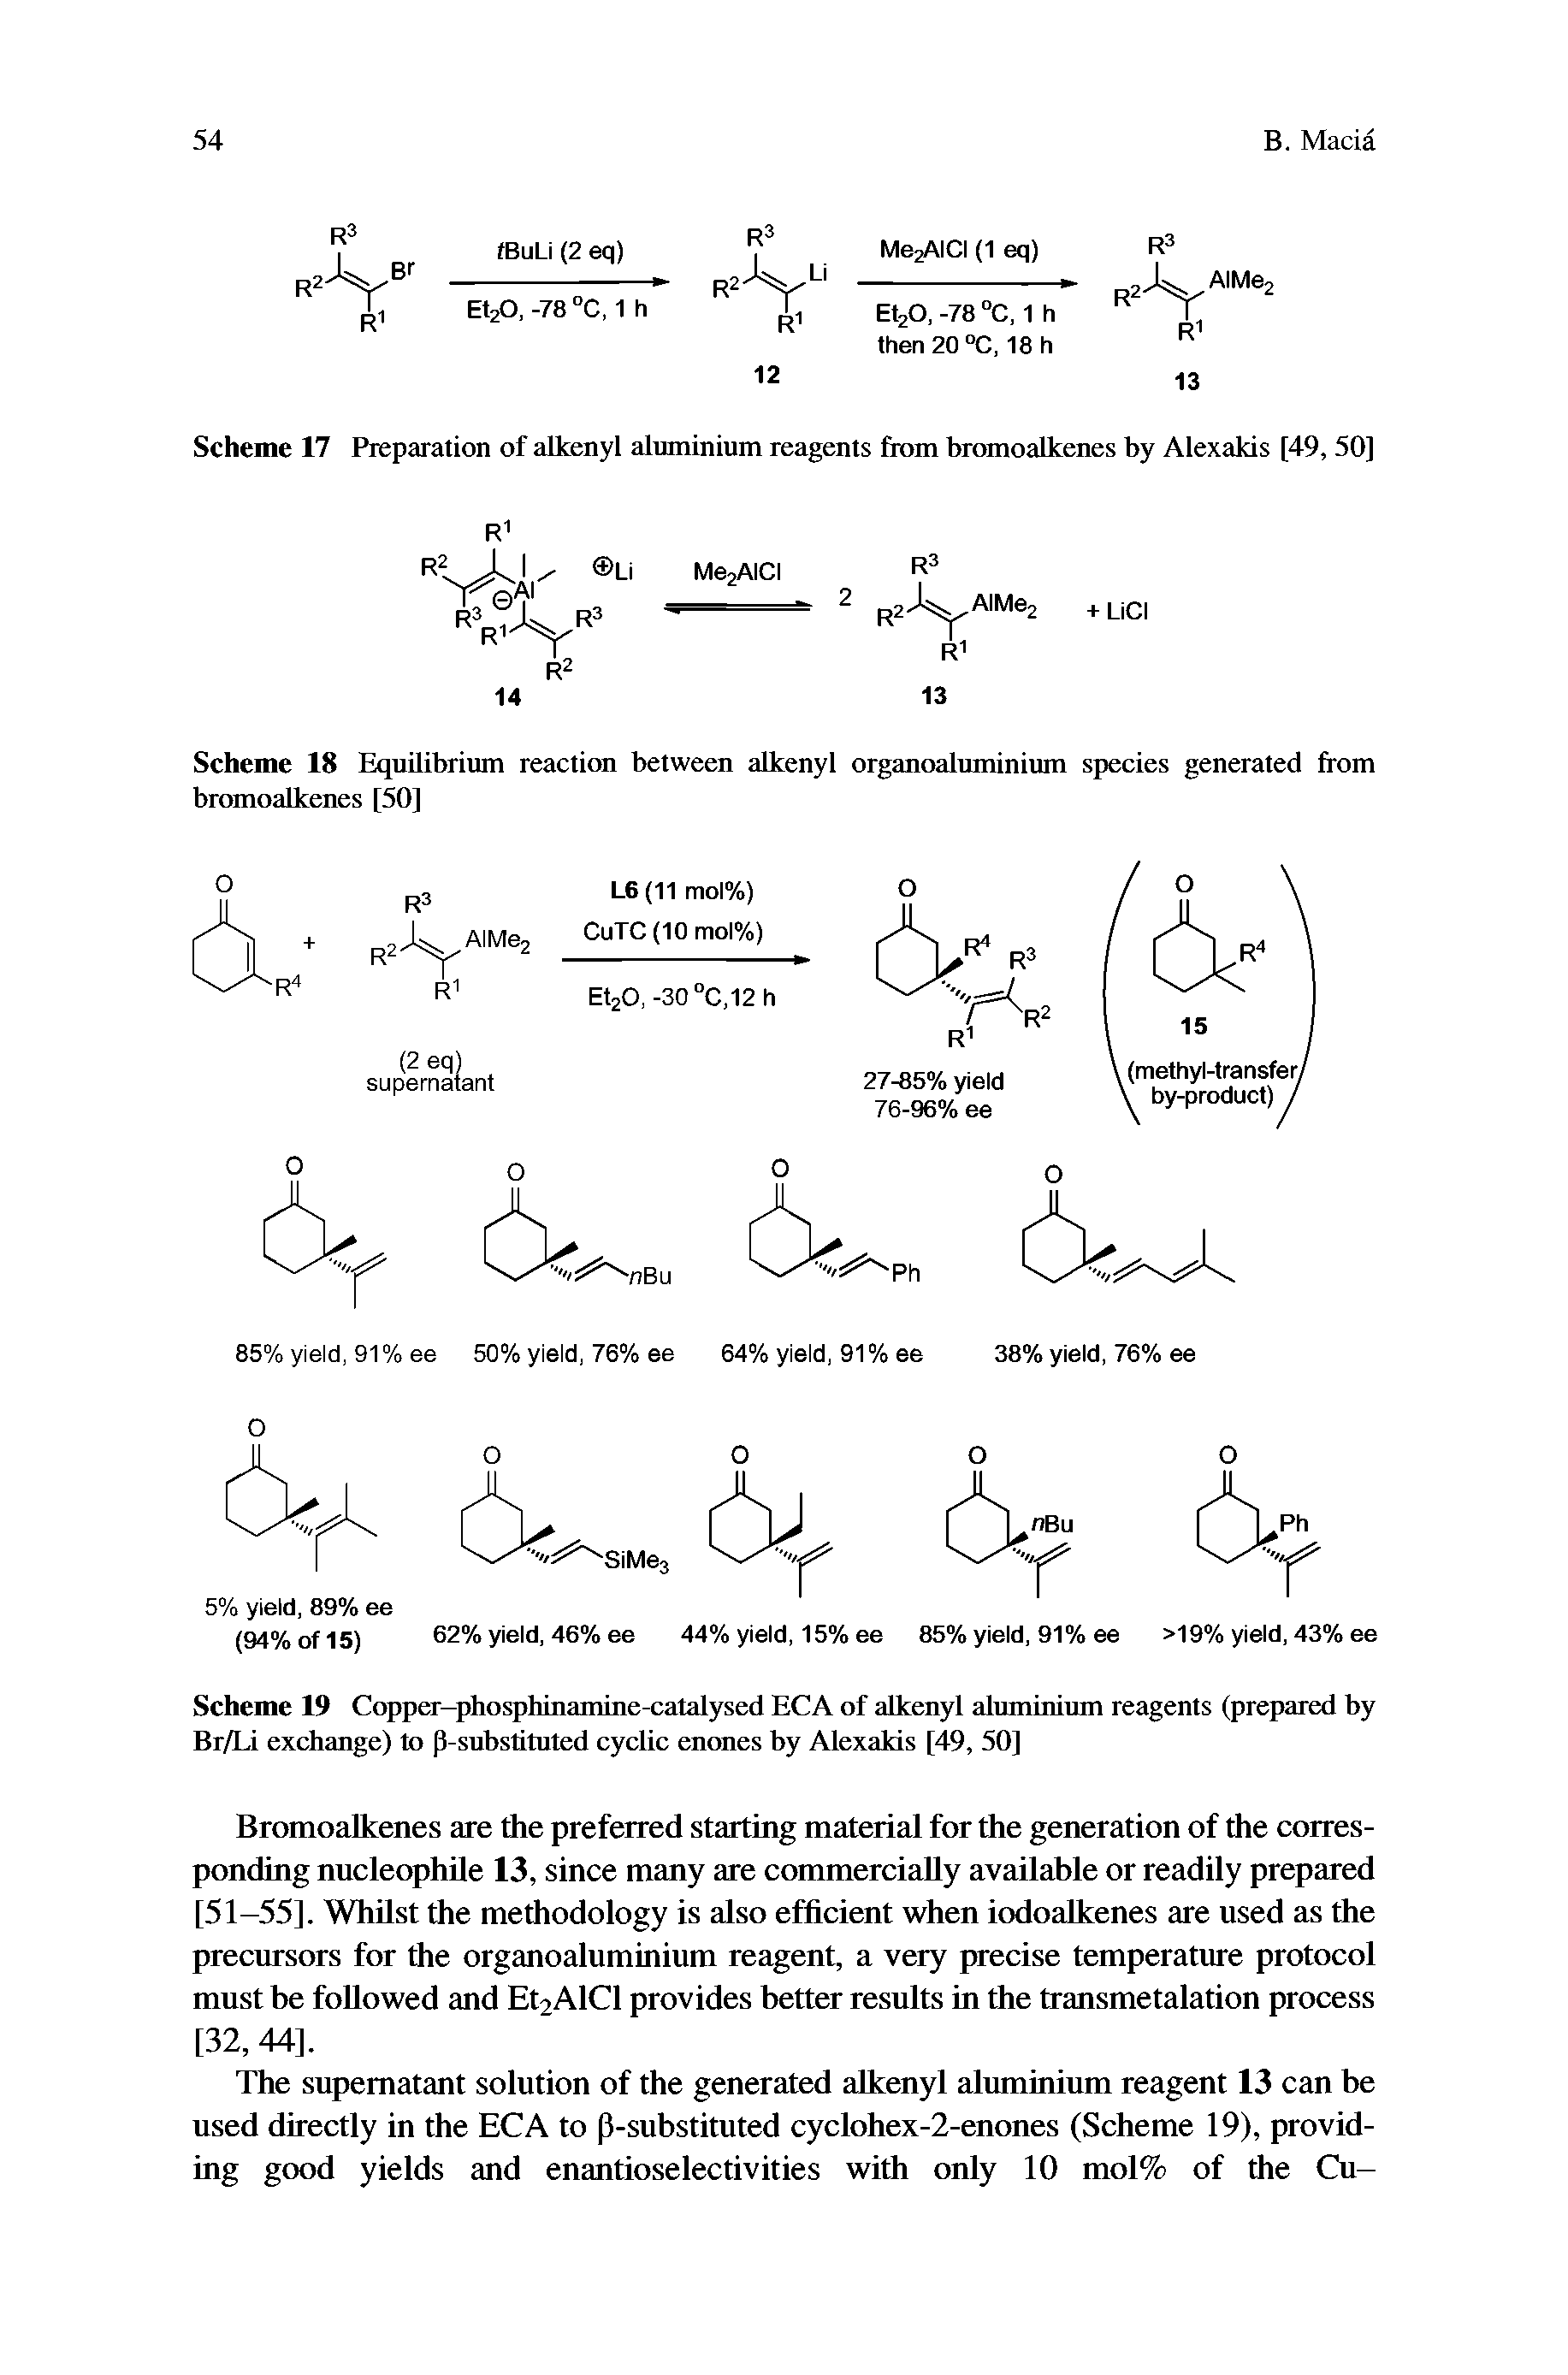 Scheme 17 Preparation of alkenyl aluminium reagents from bromoafkenes by Alexakis [49, 50]...